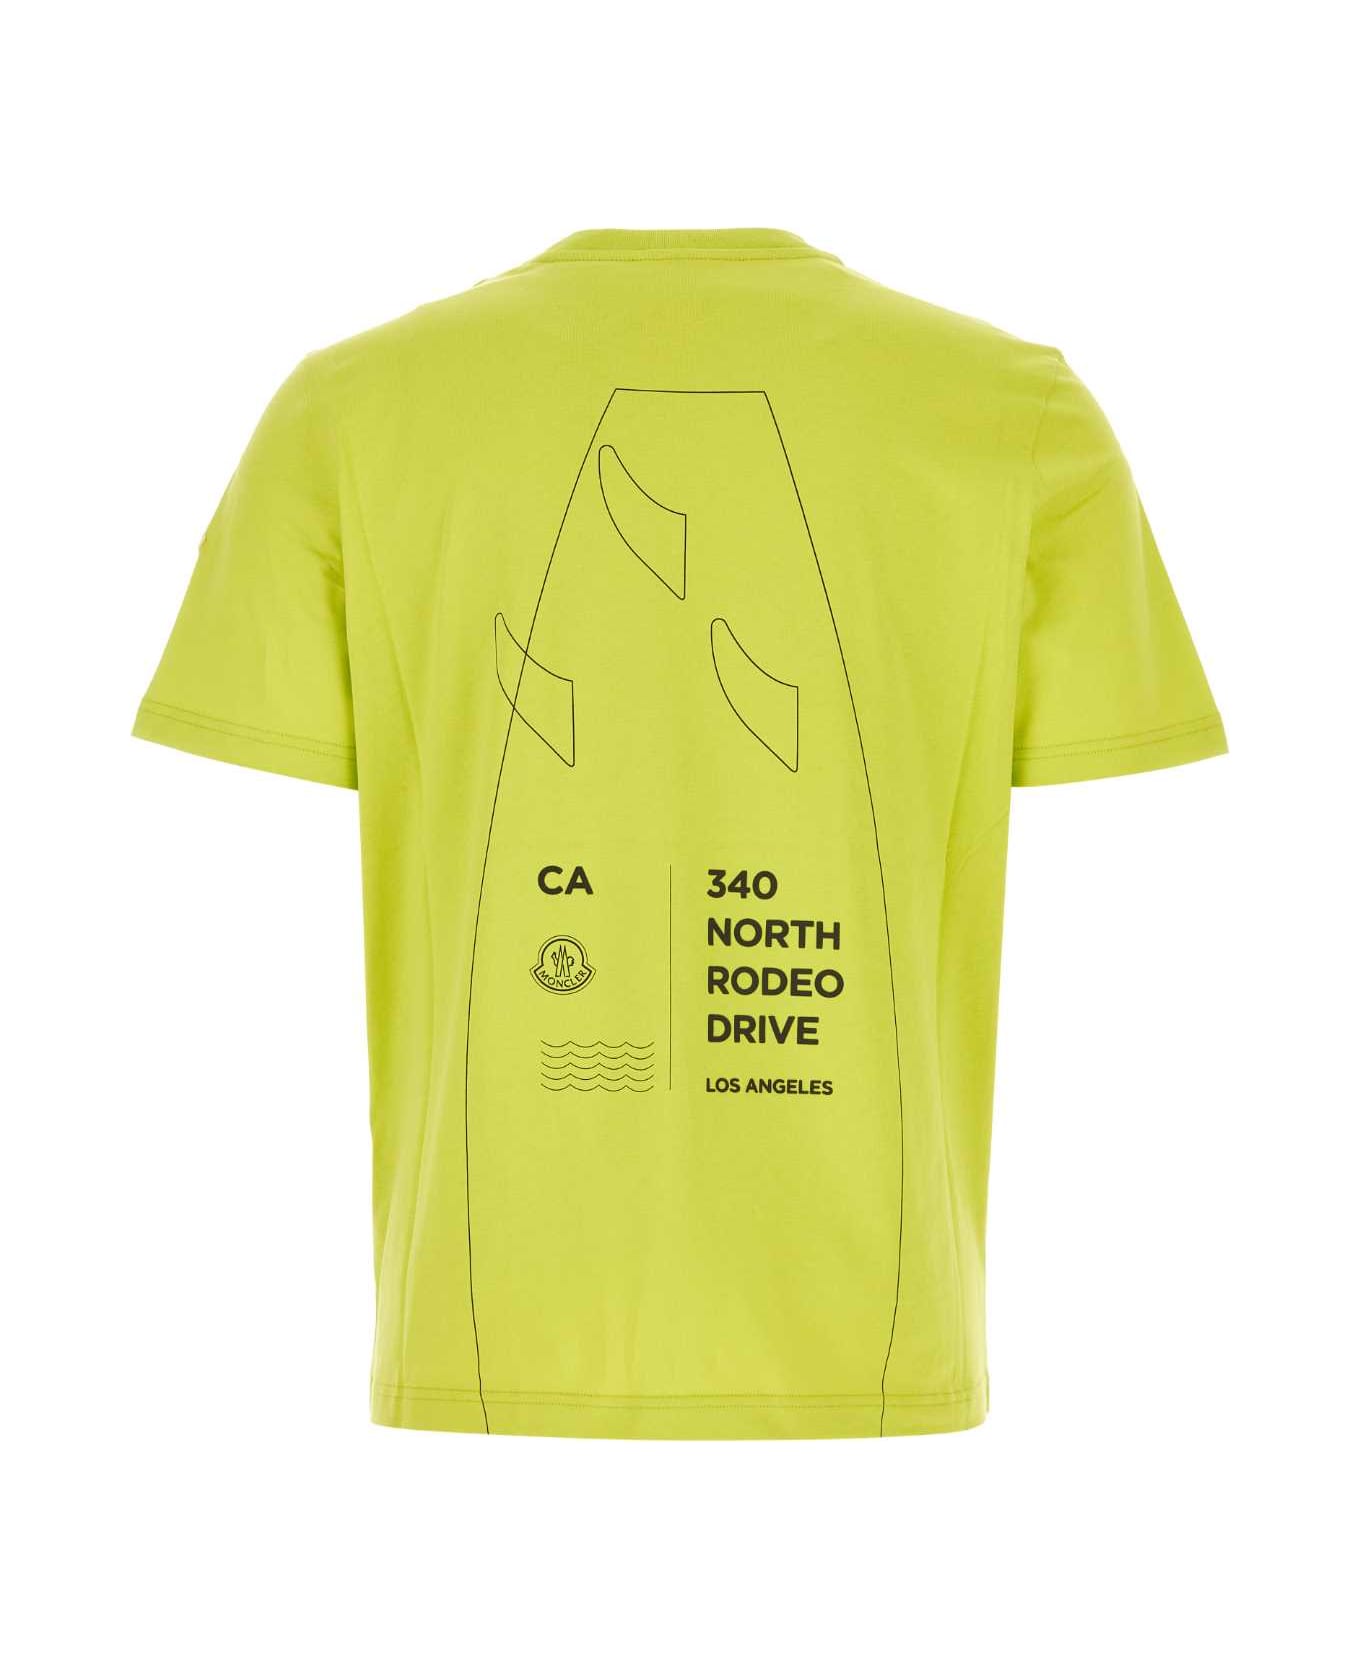 Moncler Acid Green Cotton T-shirt - 11G